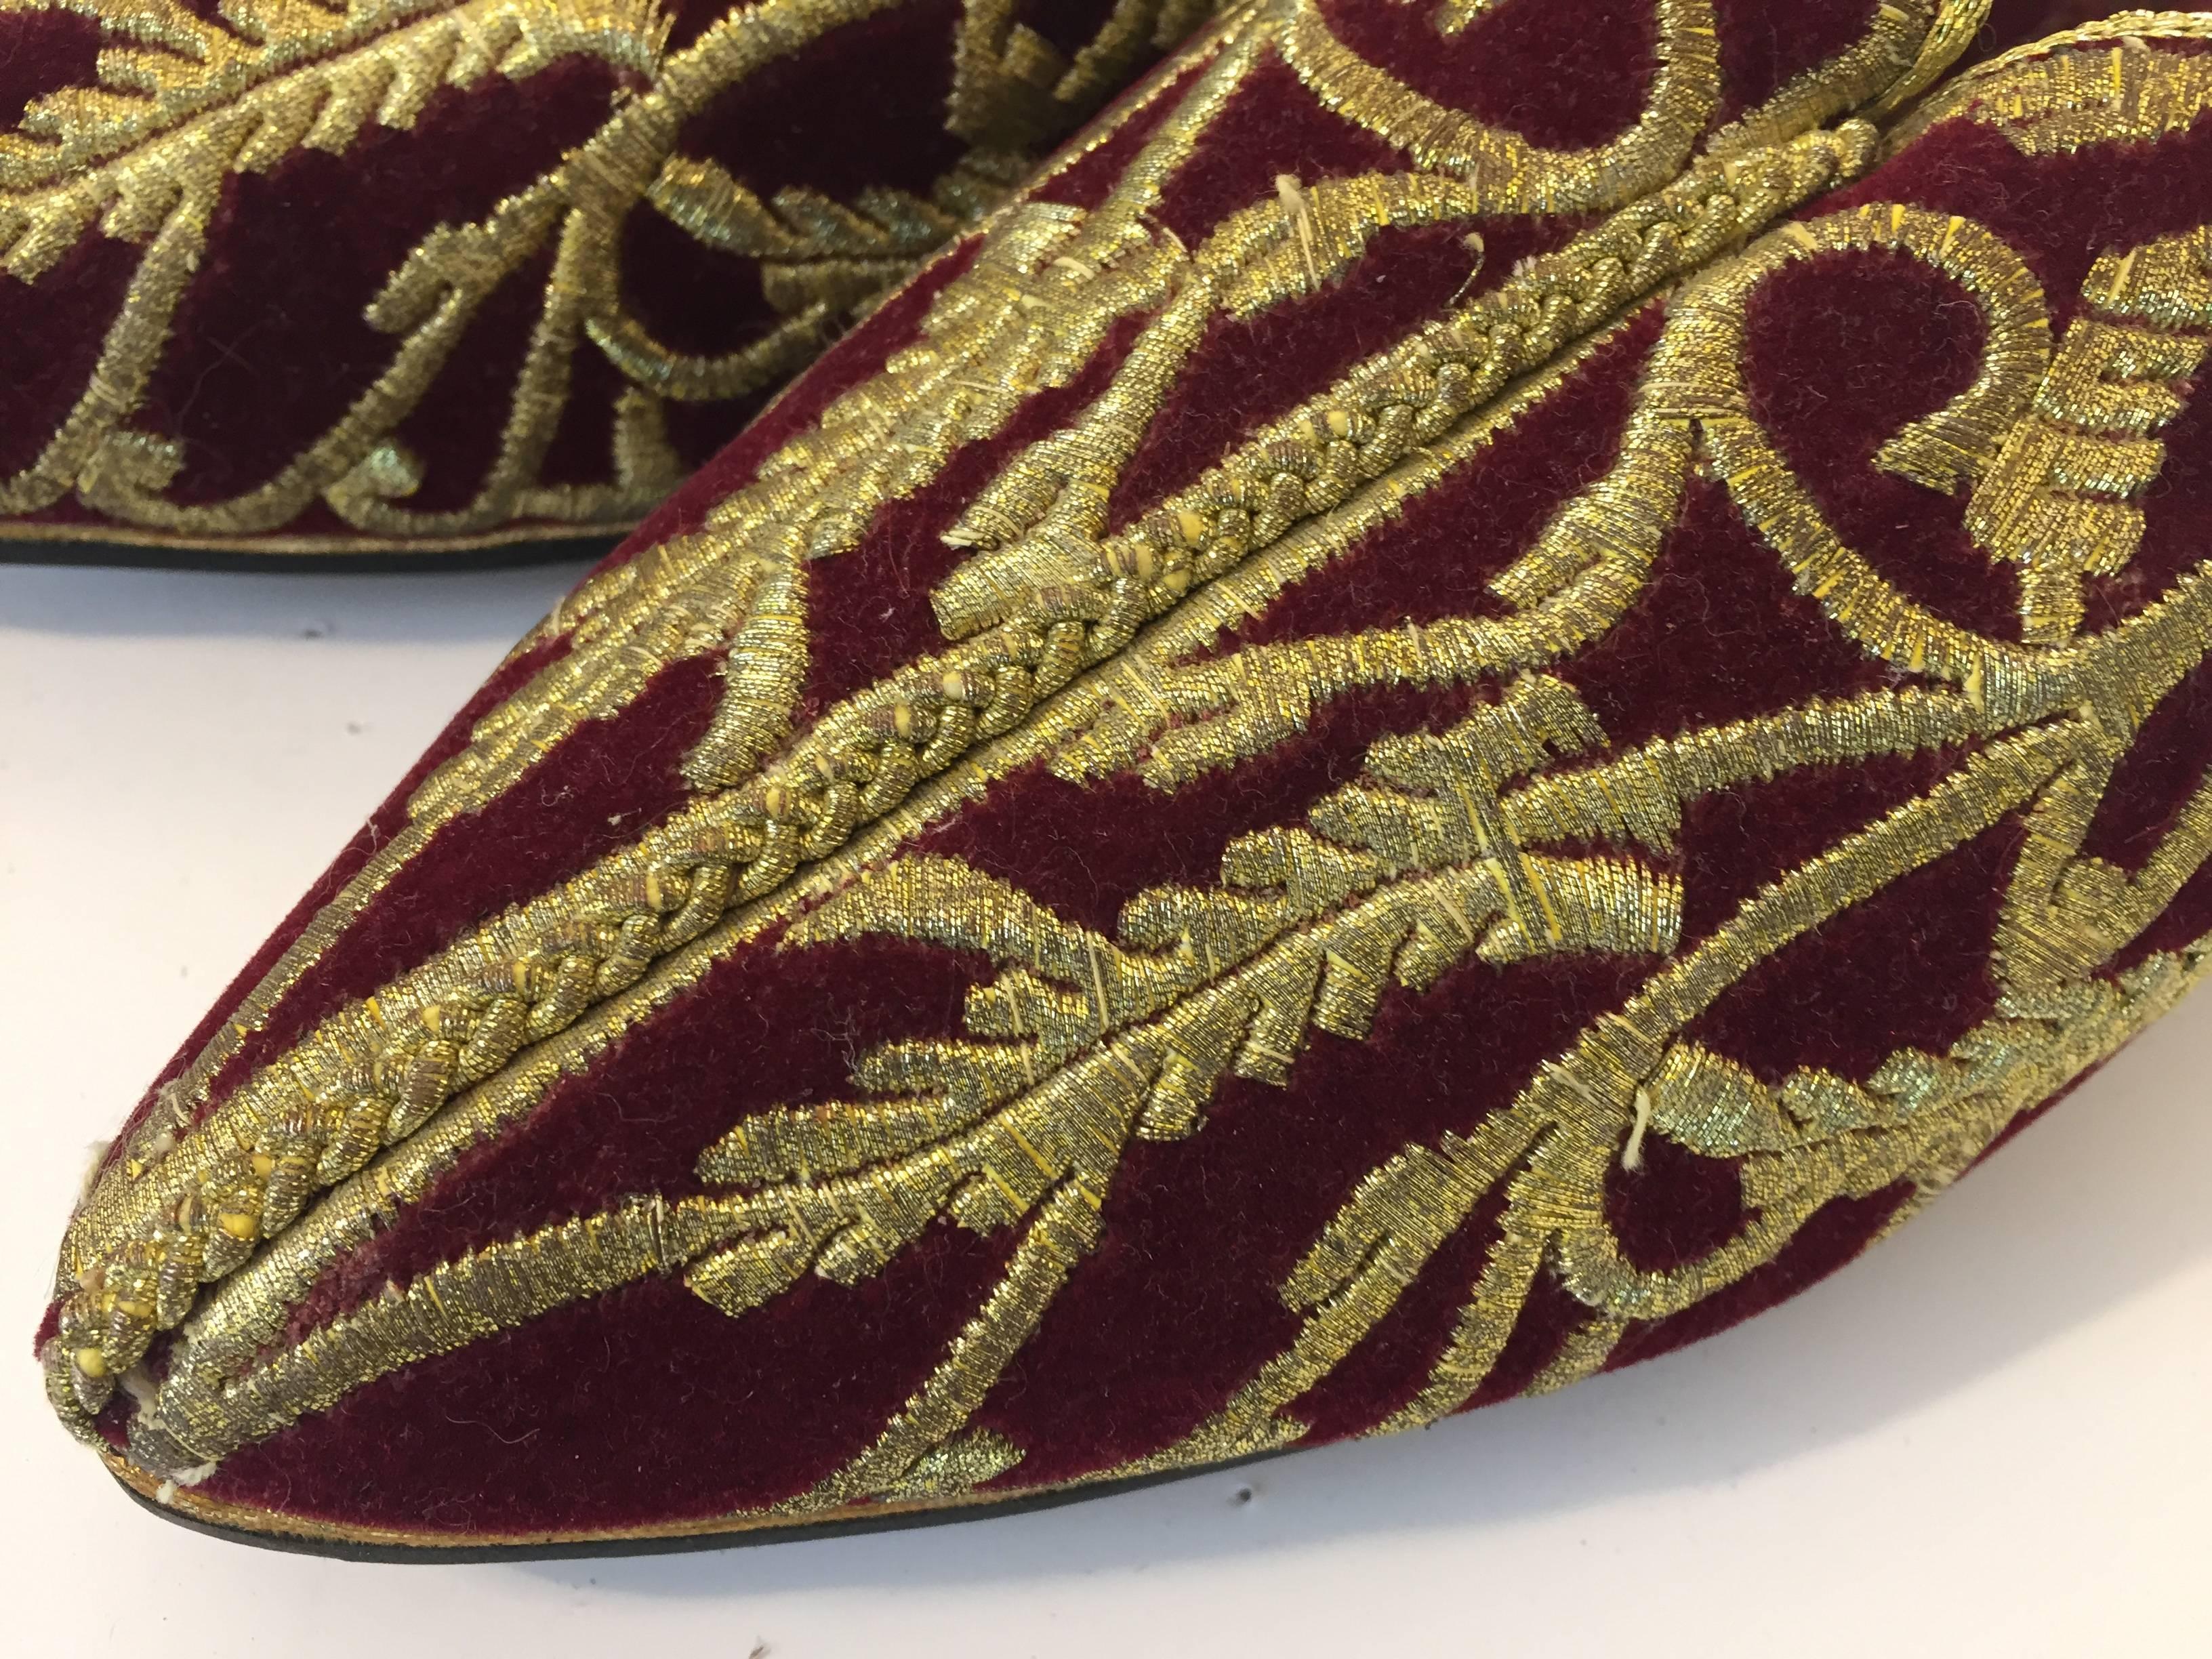 embroidered velvet shoes